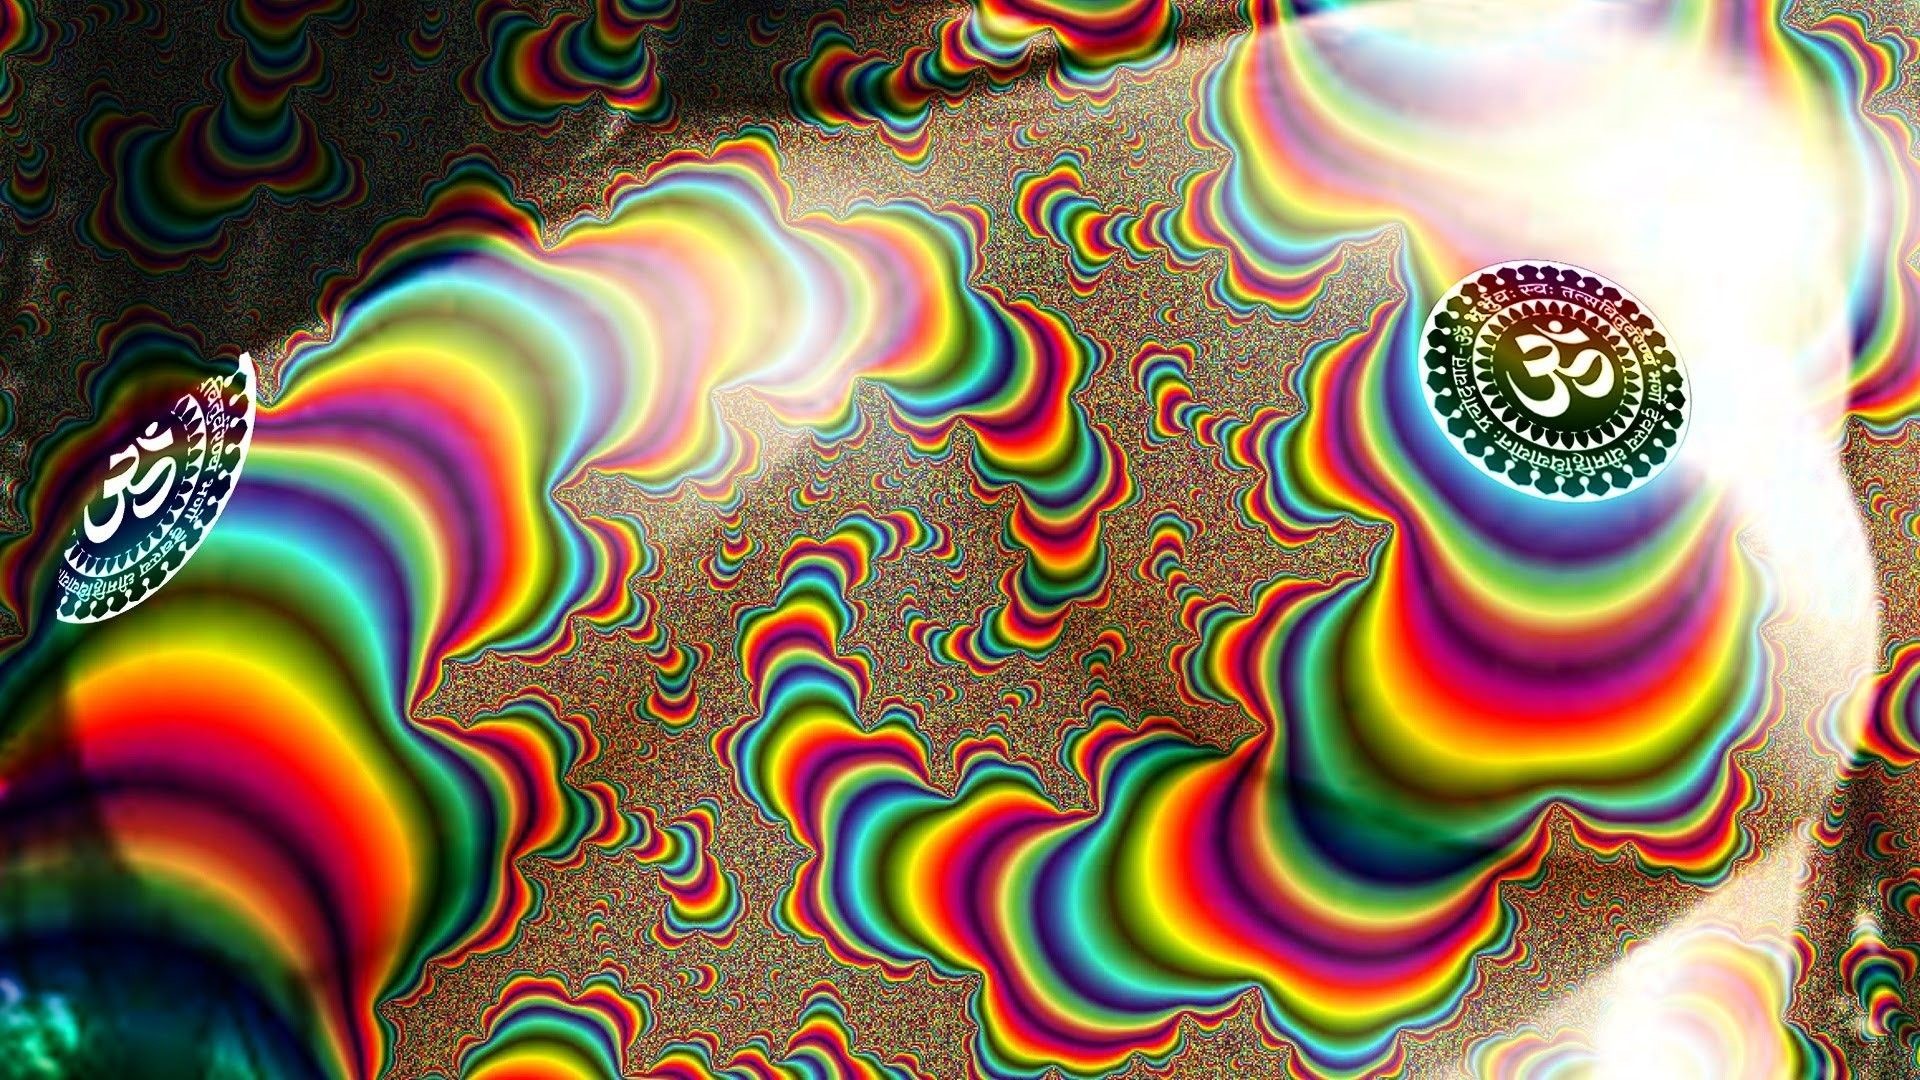 Acid Trip Backgrounds 81 Images